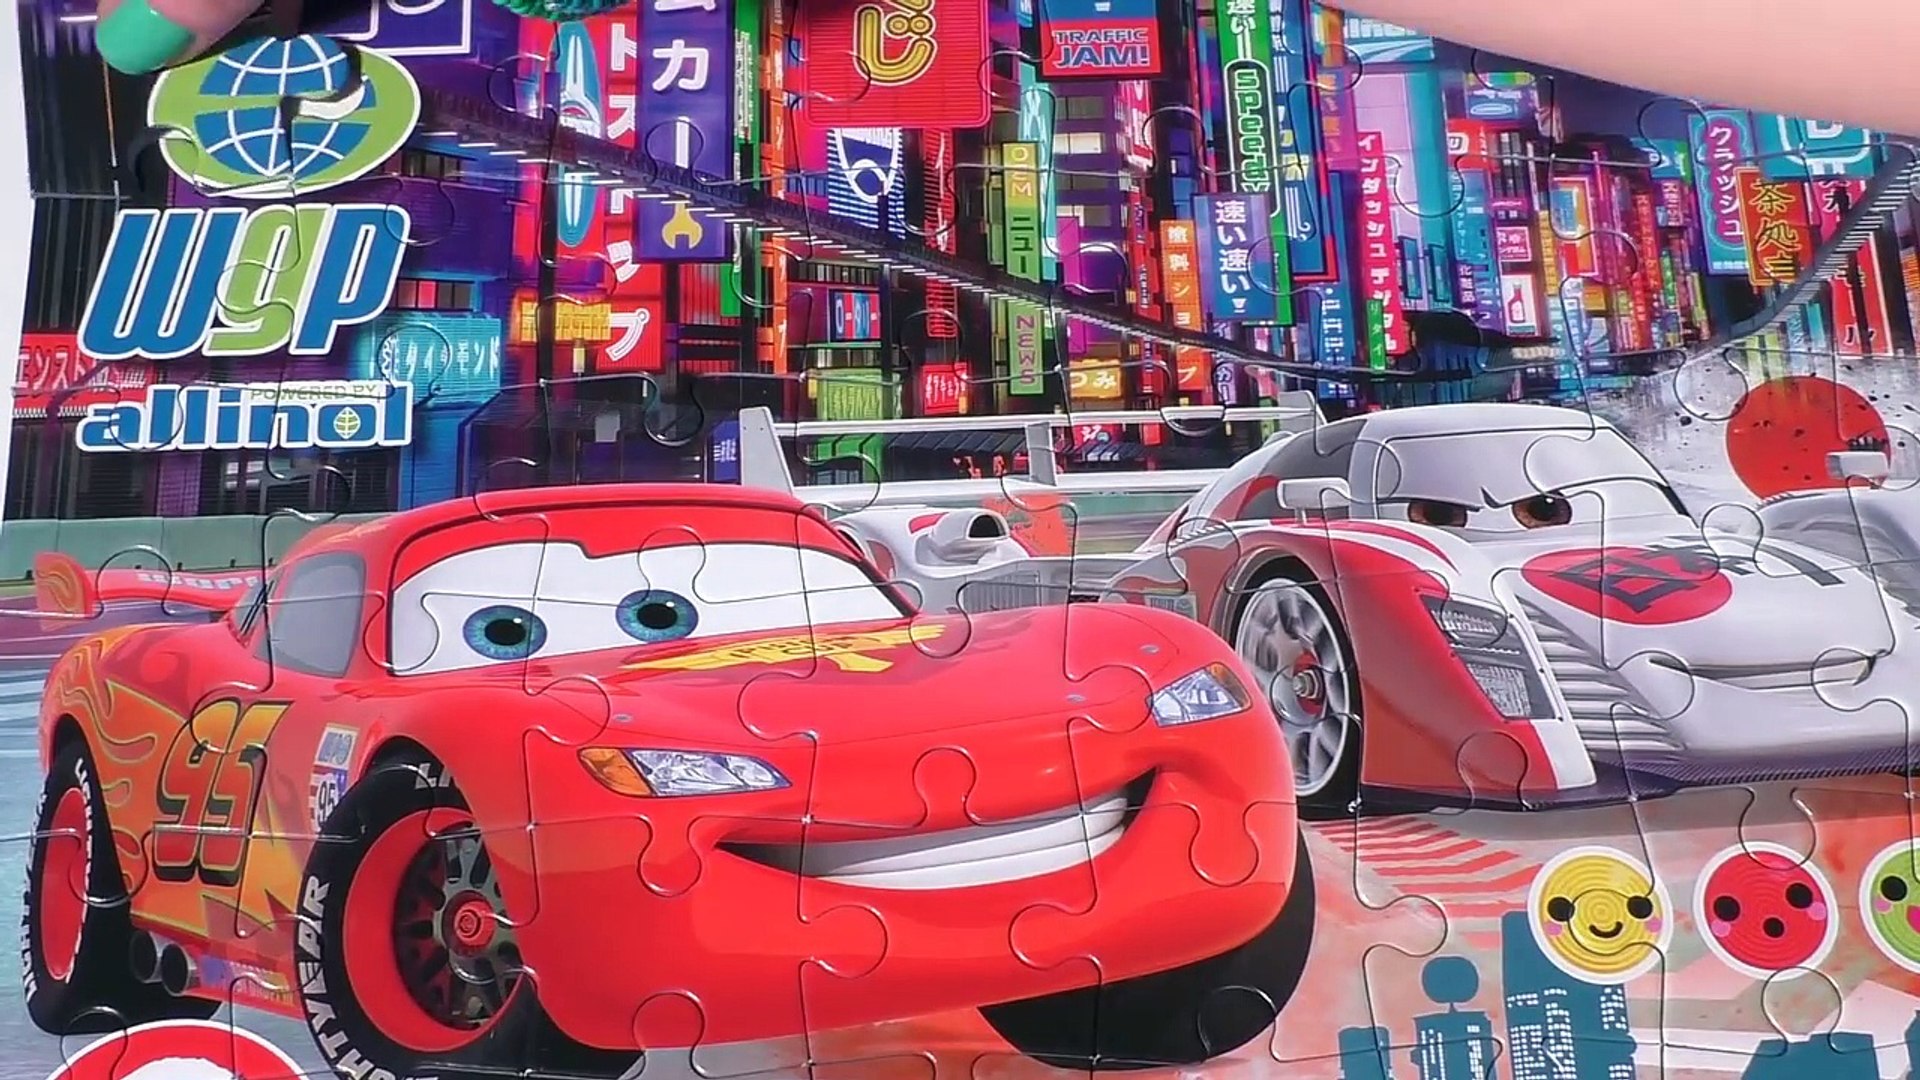 Disney Pixar Cars Puzzle Game Rompecabezas Clementoni Play Set De Kids Toys  - video Dailymotion